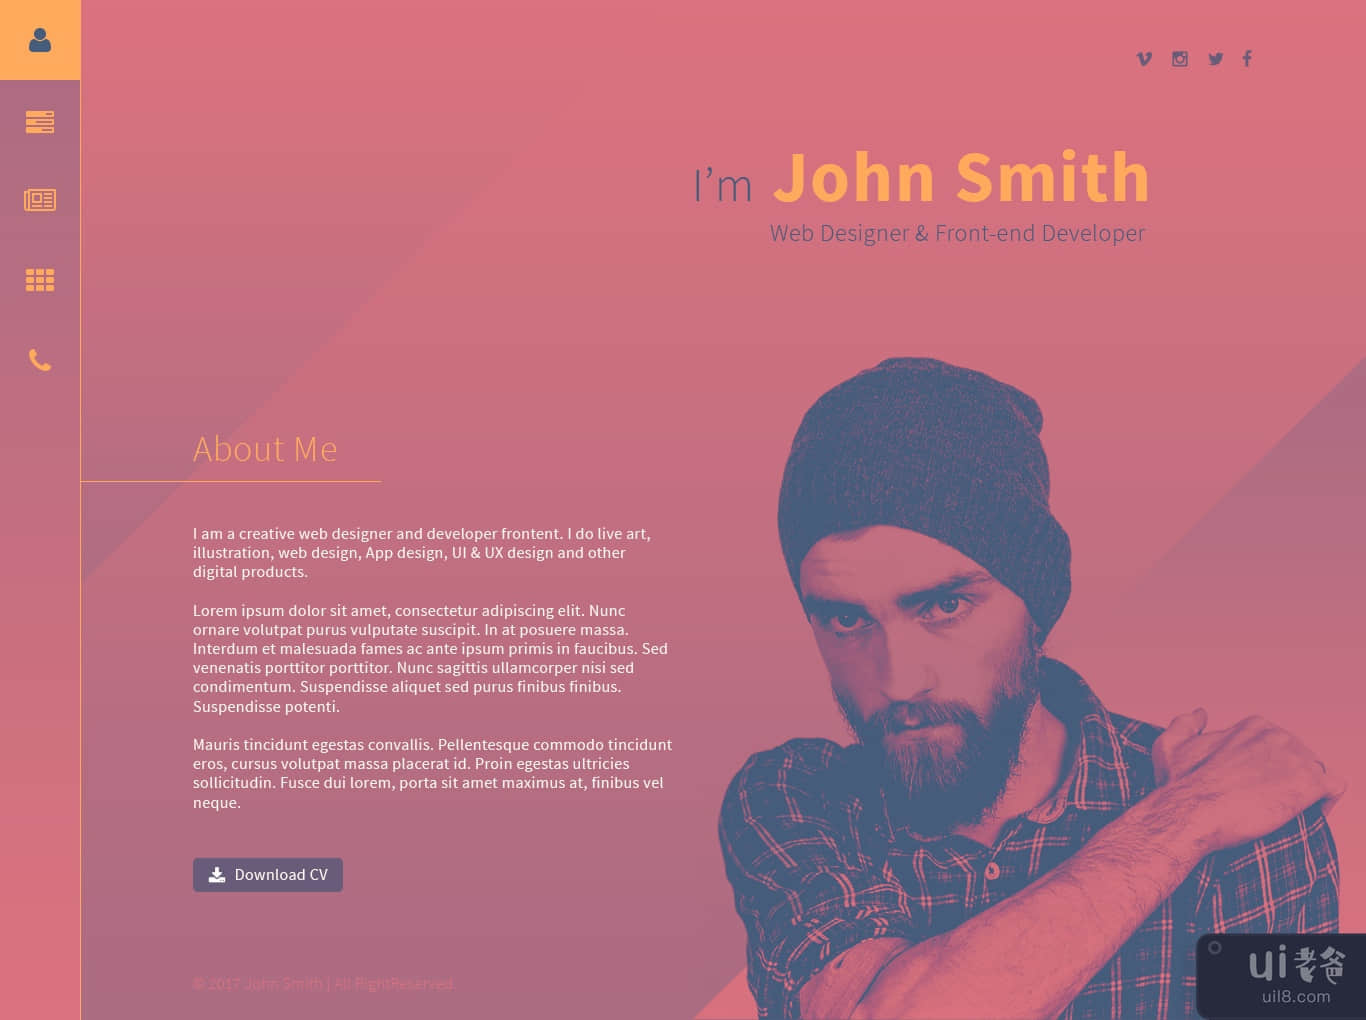 JohnSmith - 设计师作品集网站(JohnSmith - Designer’s Portfolio Website)插图1